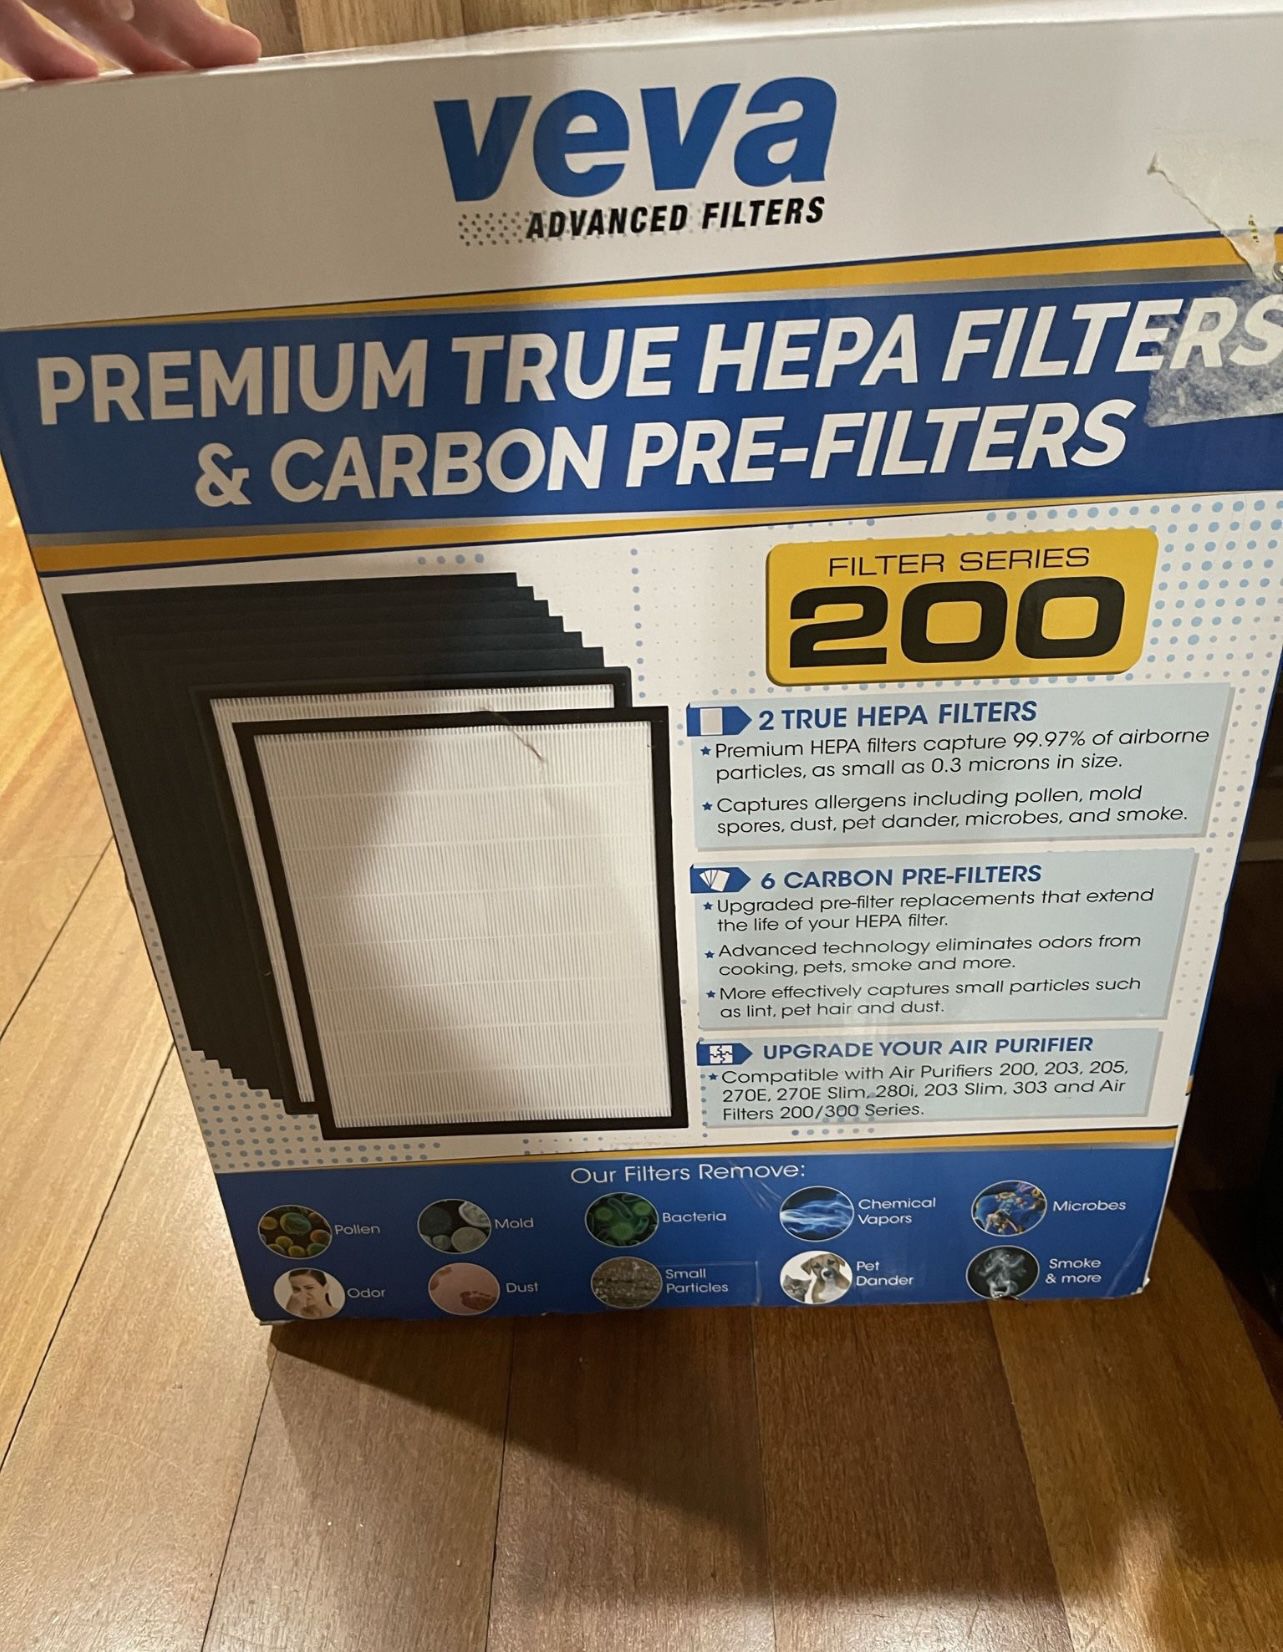 *New*  Premium True Hepa Filter + Carbon Pre Filter 17 1/2” X 14” X 1 1/2”